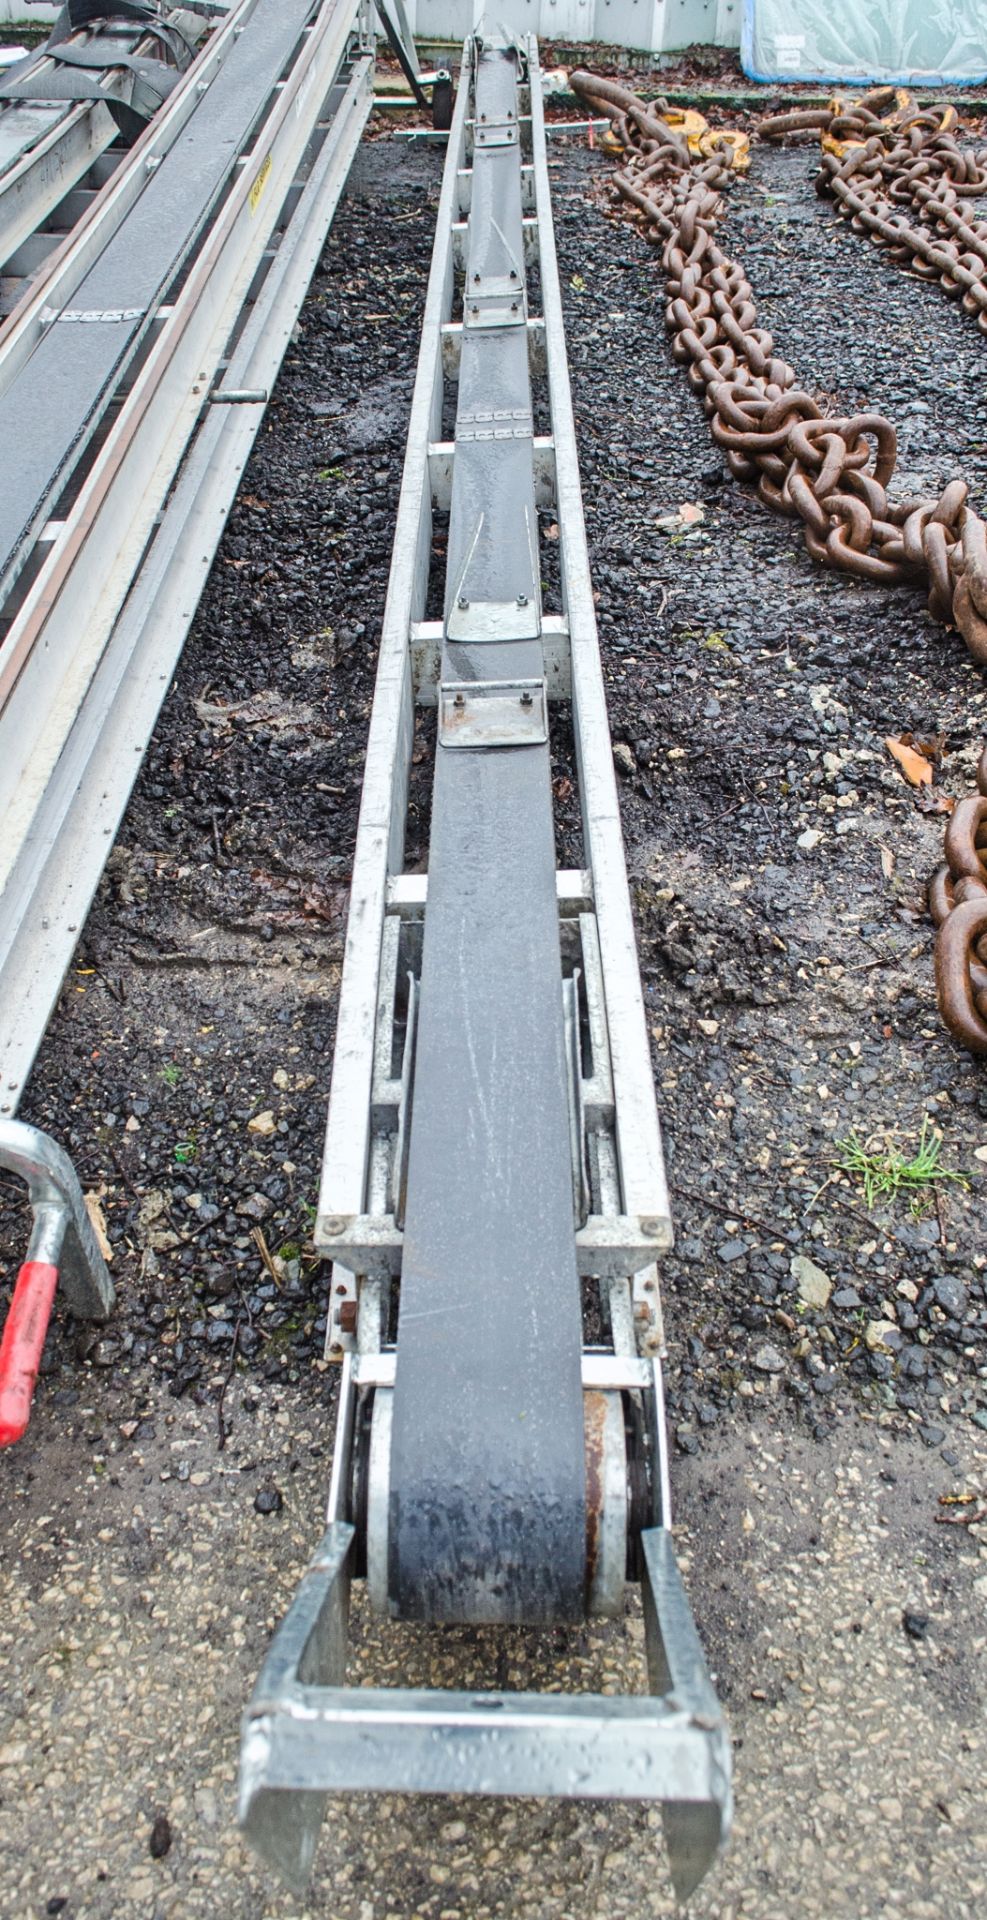 Mace Hoddi 110v brick conveyor A626306 - Image 3 of 3